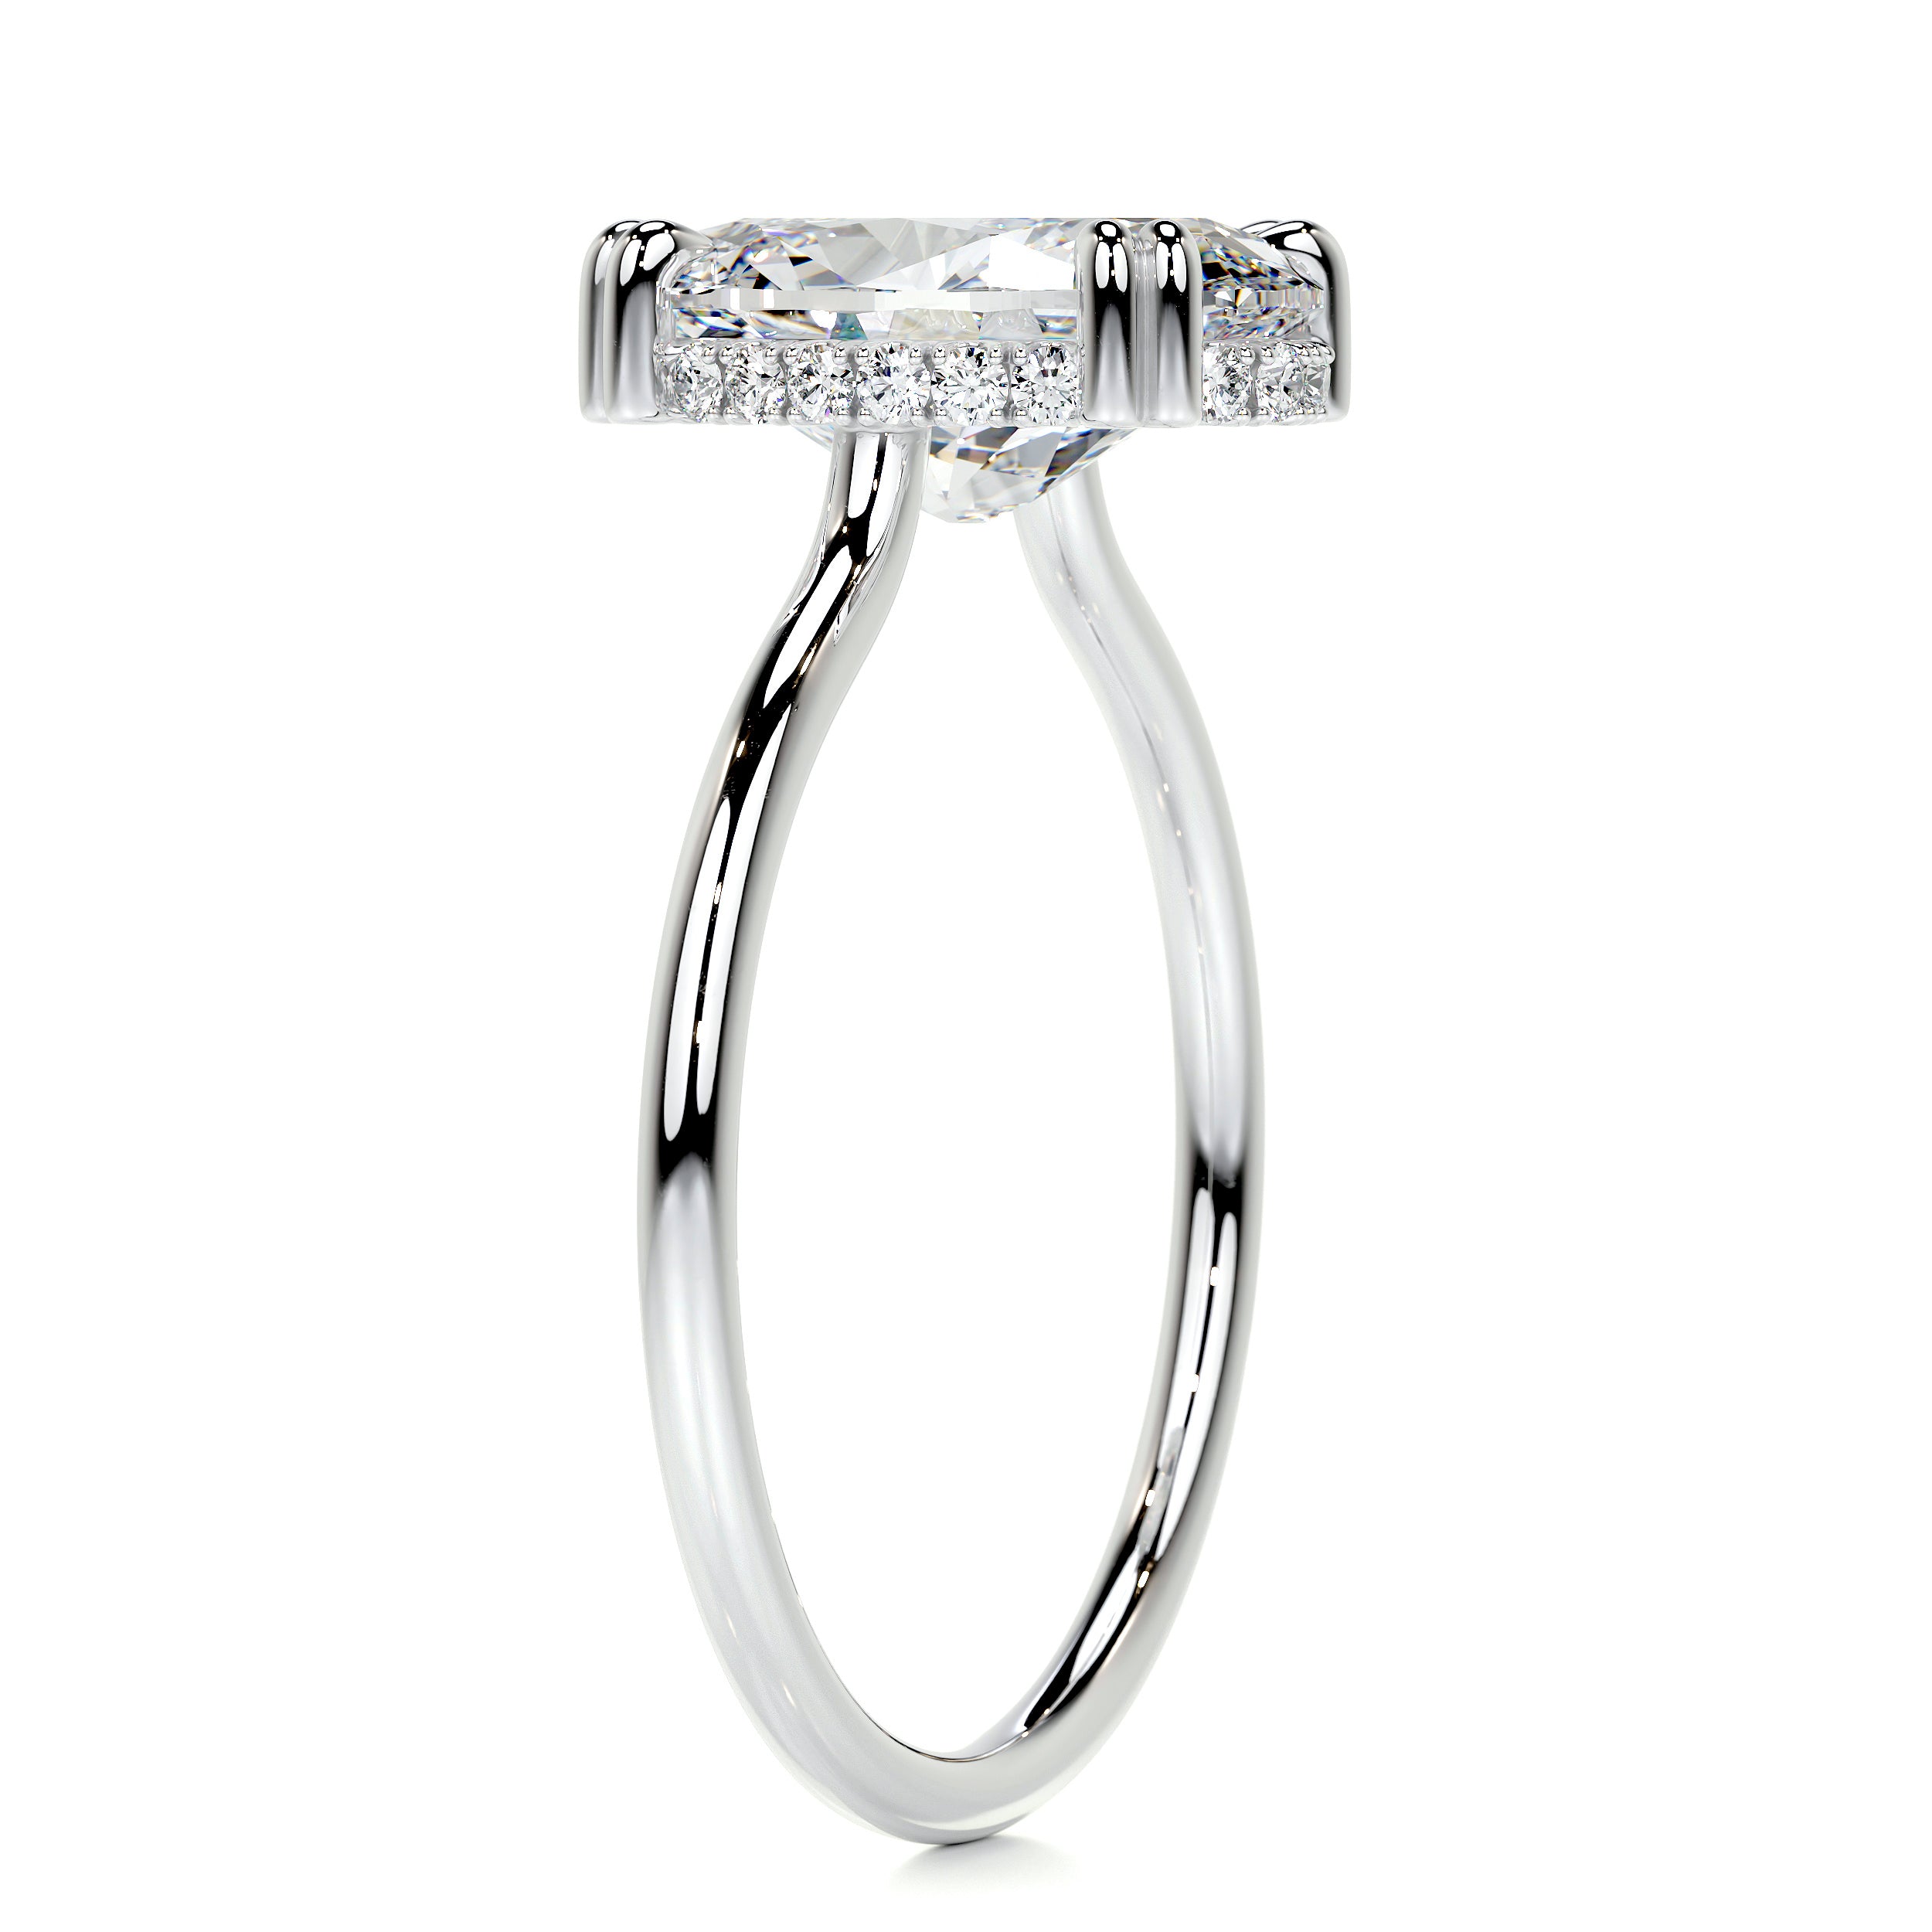 Harriet Diamond Engagement Ring   (3.1 Carat) -14K White Gold